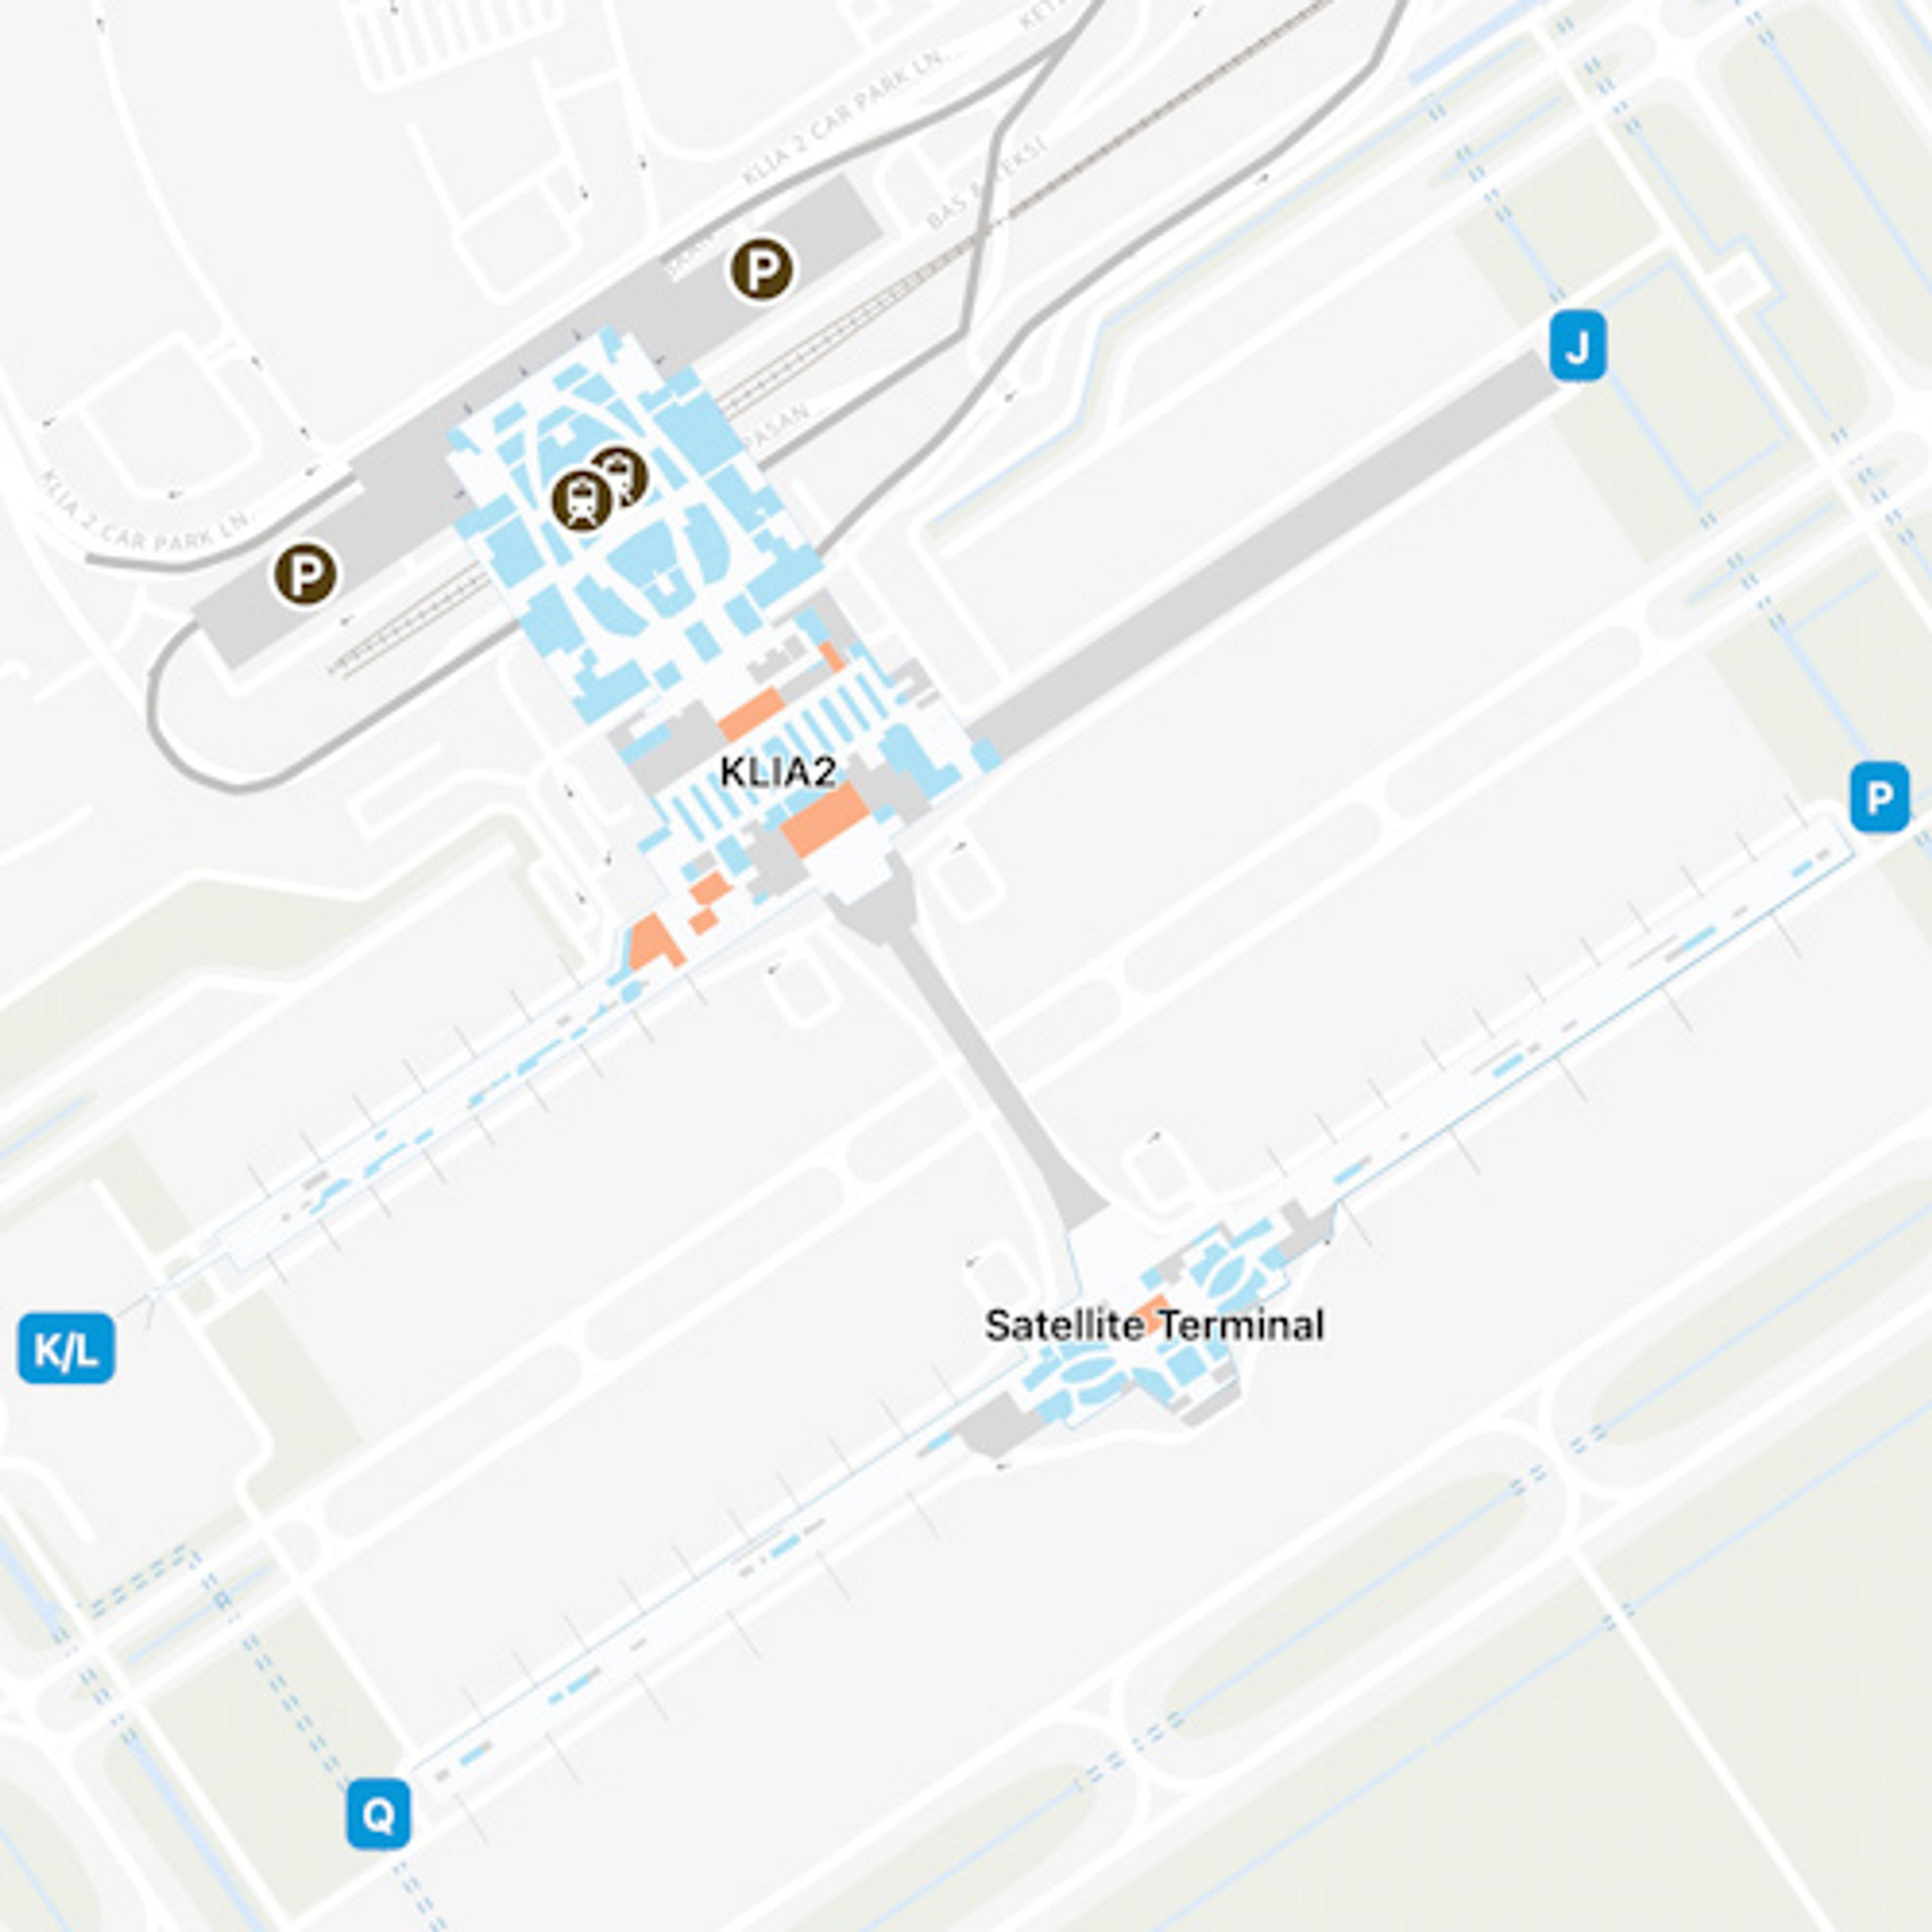 Selangor Airport Low Cost Carrier Terminal Map